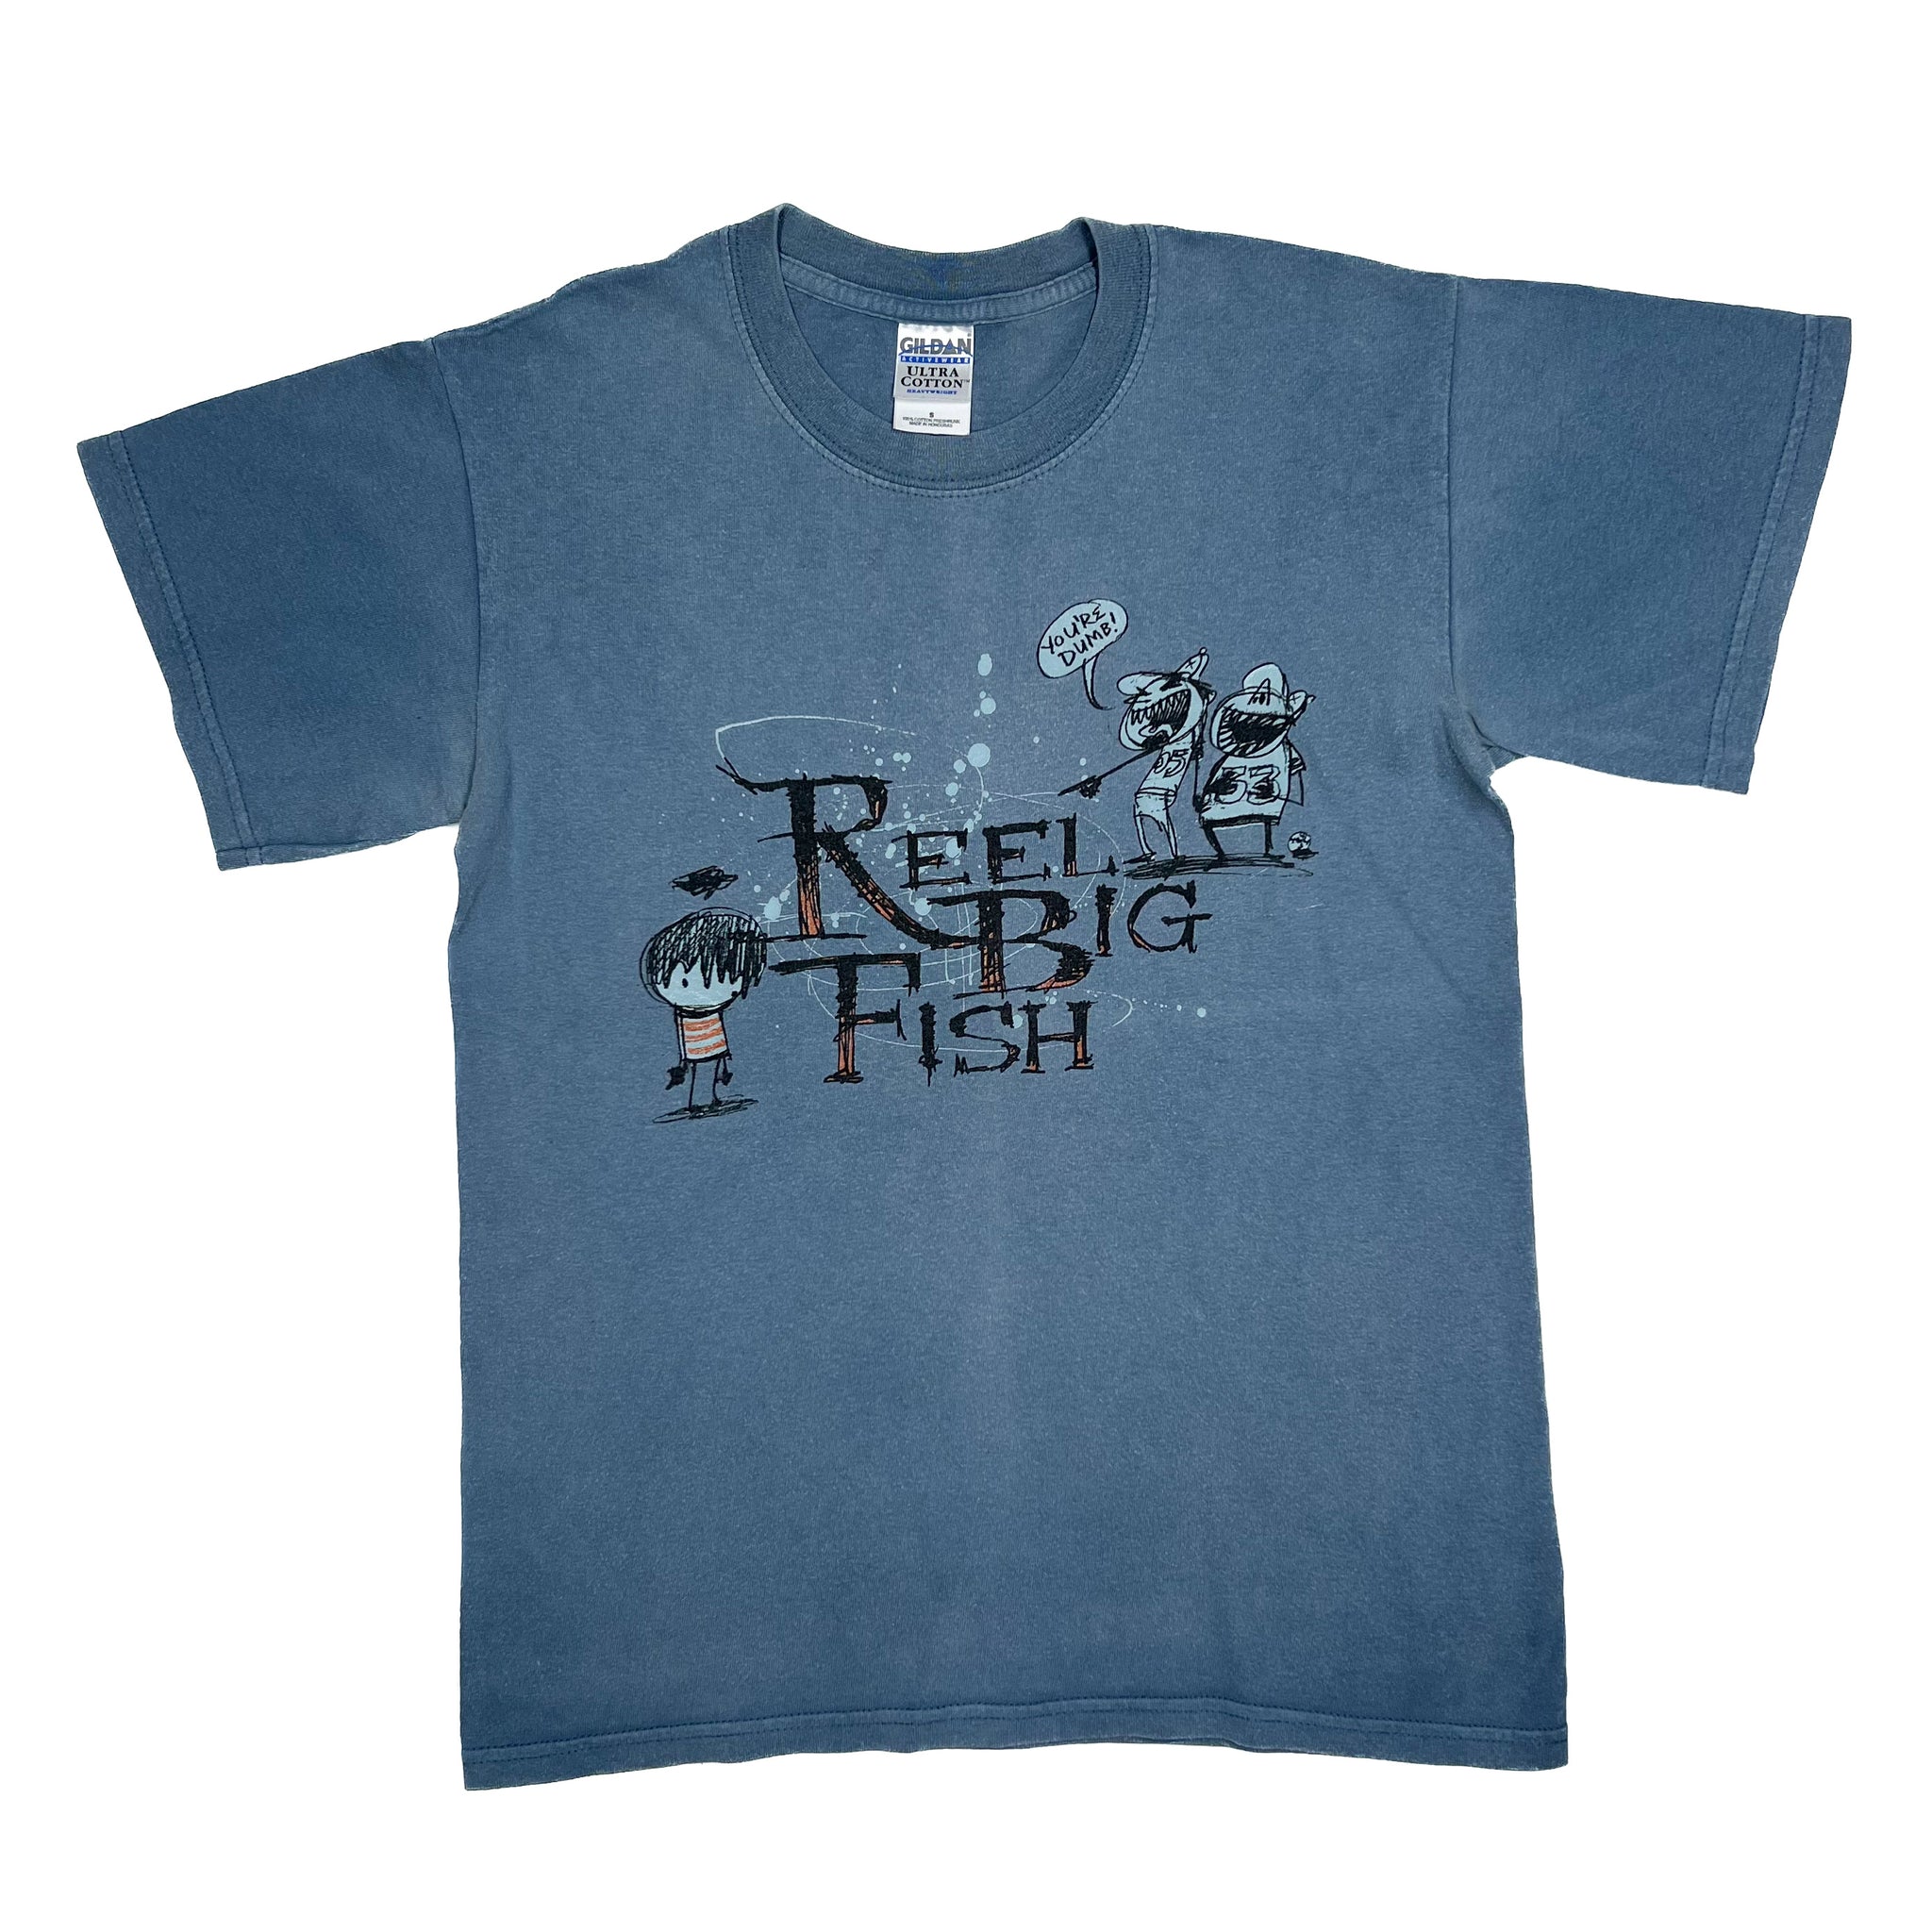 REEL BIG FISH “You're Dumb!” Spellout Graphic Ska Pop Punk Band T-Shir –  George Worgan VTG